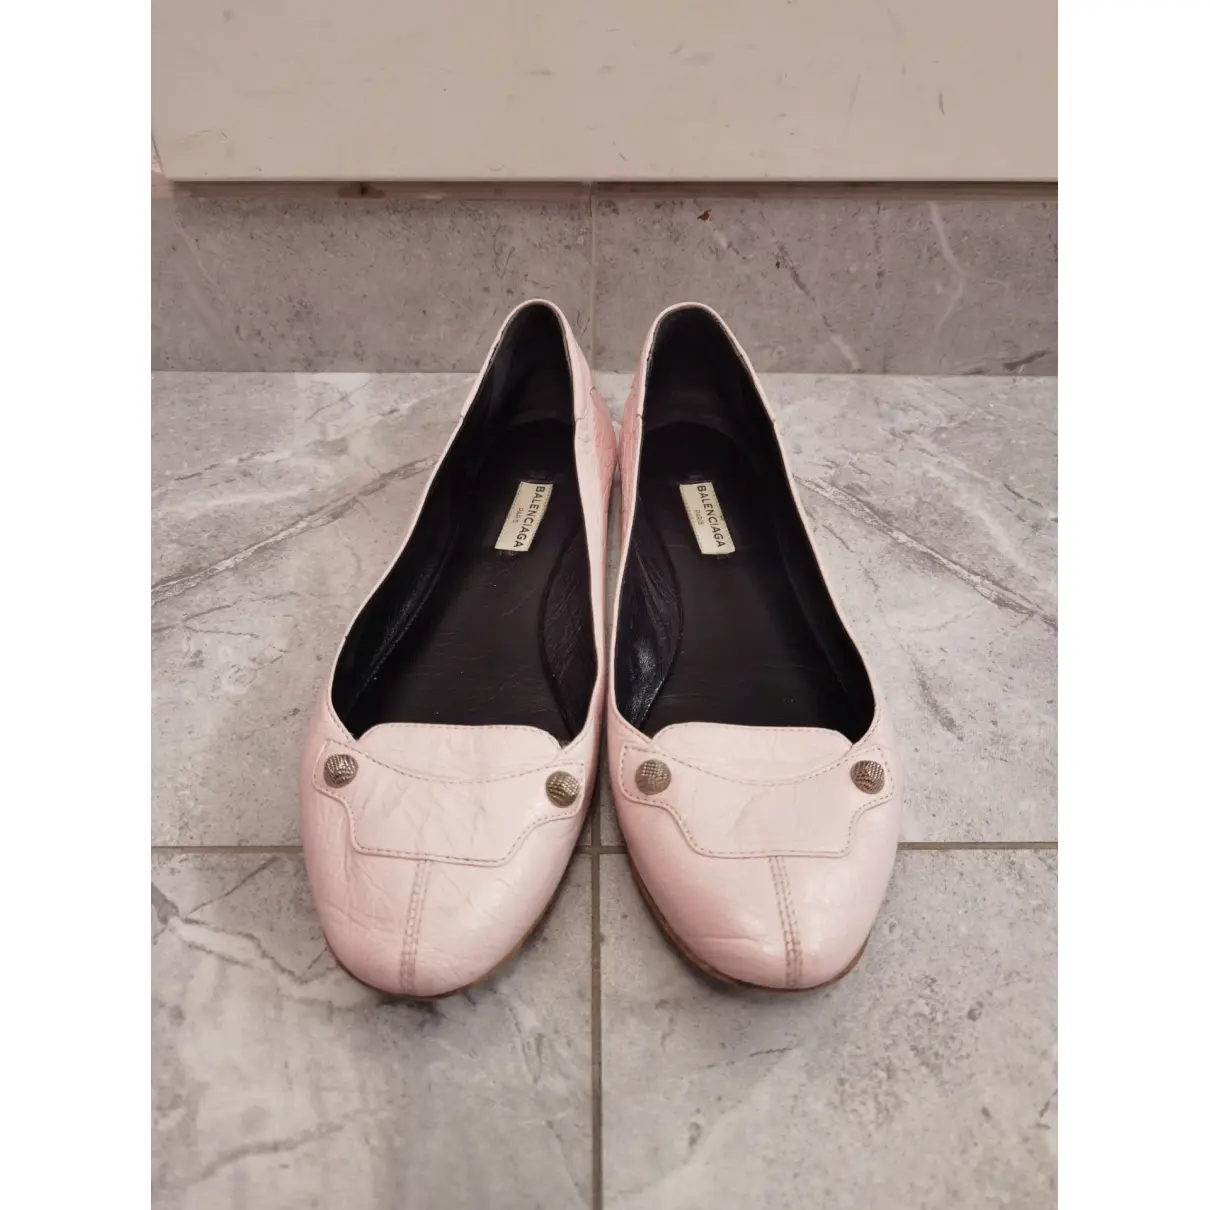 Buy Balenciaga Leather ballet flats online